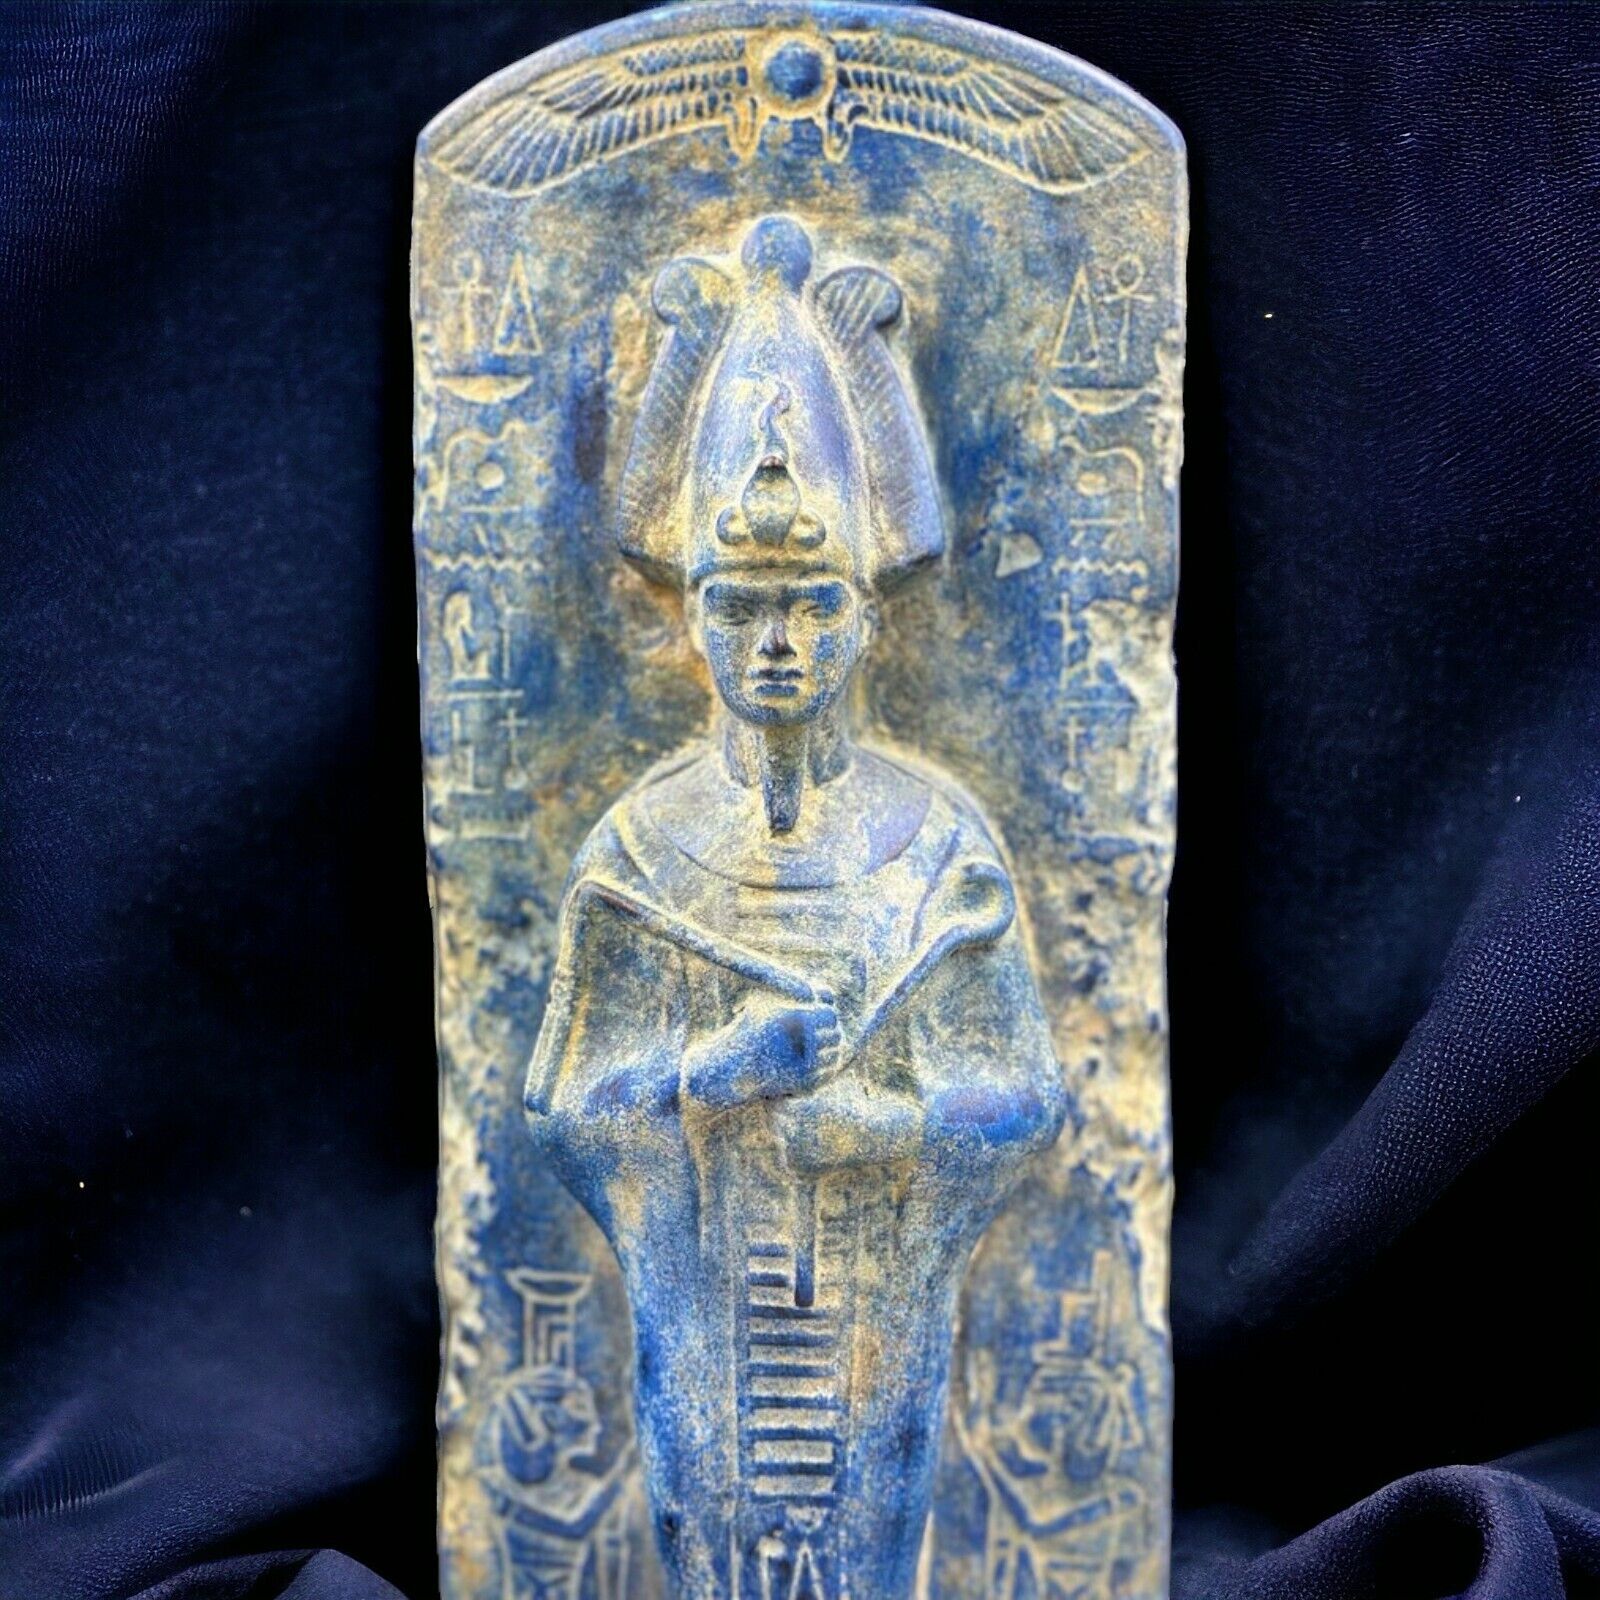 Authentic Osiris Statue - Ancient Egyptian God of the Underworld, Finest Stone